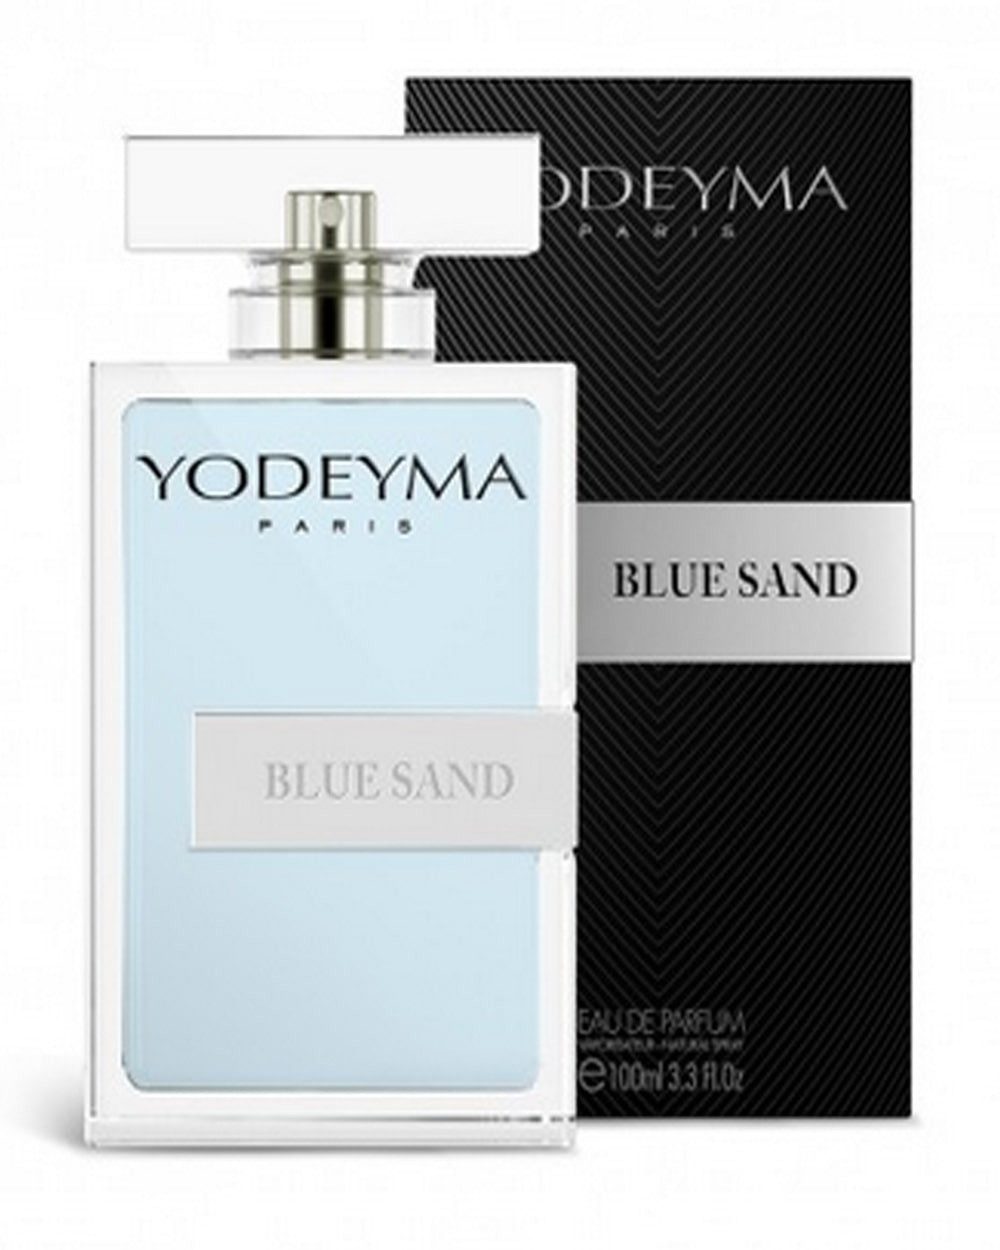 Eau de Parfum YODEYMA Parfum Blue Sand - Eau de Parfum für Herren 100 ml